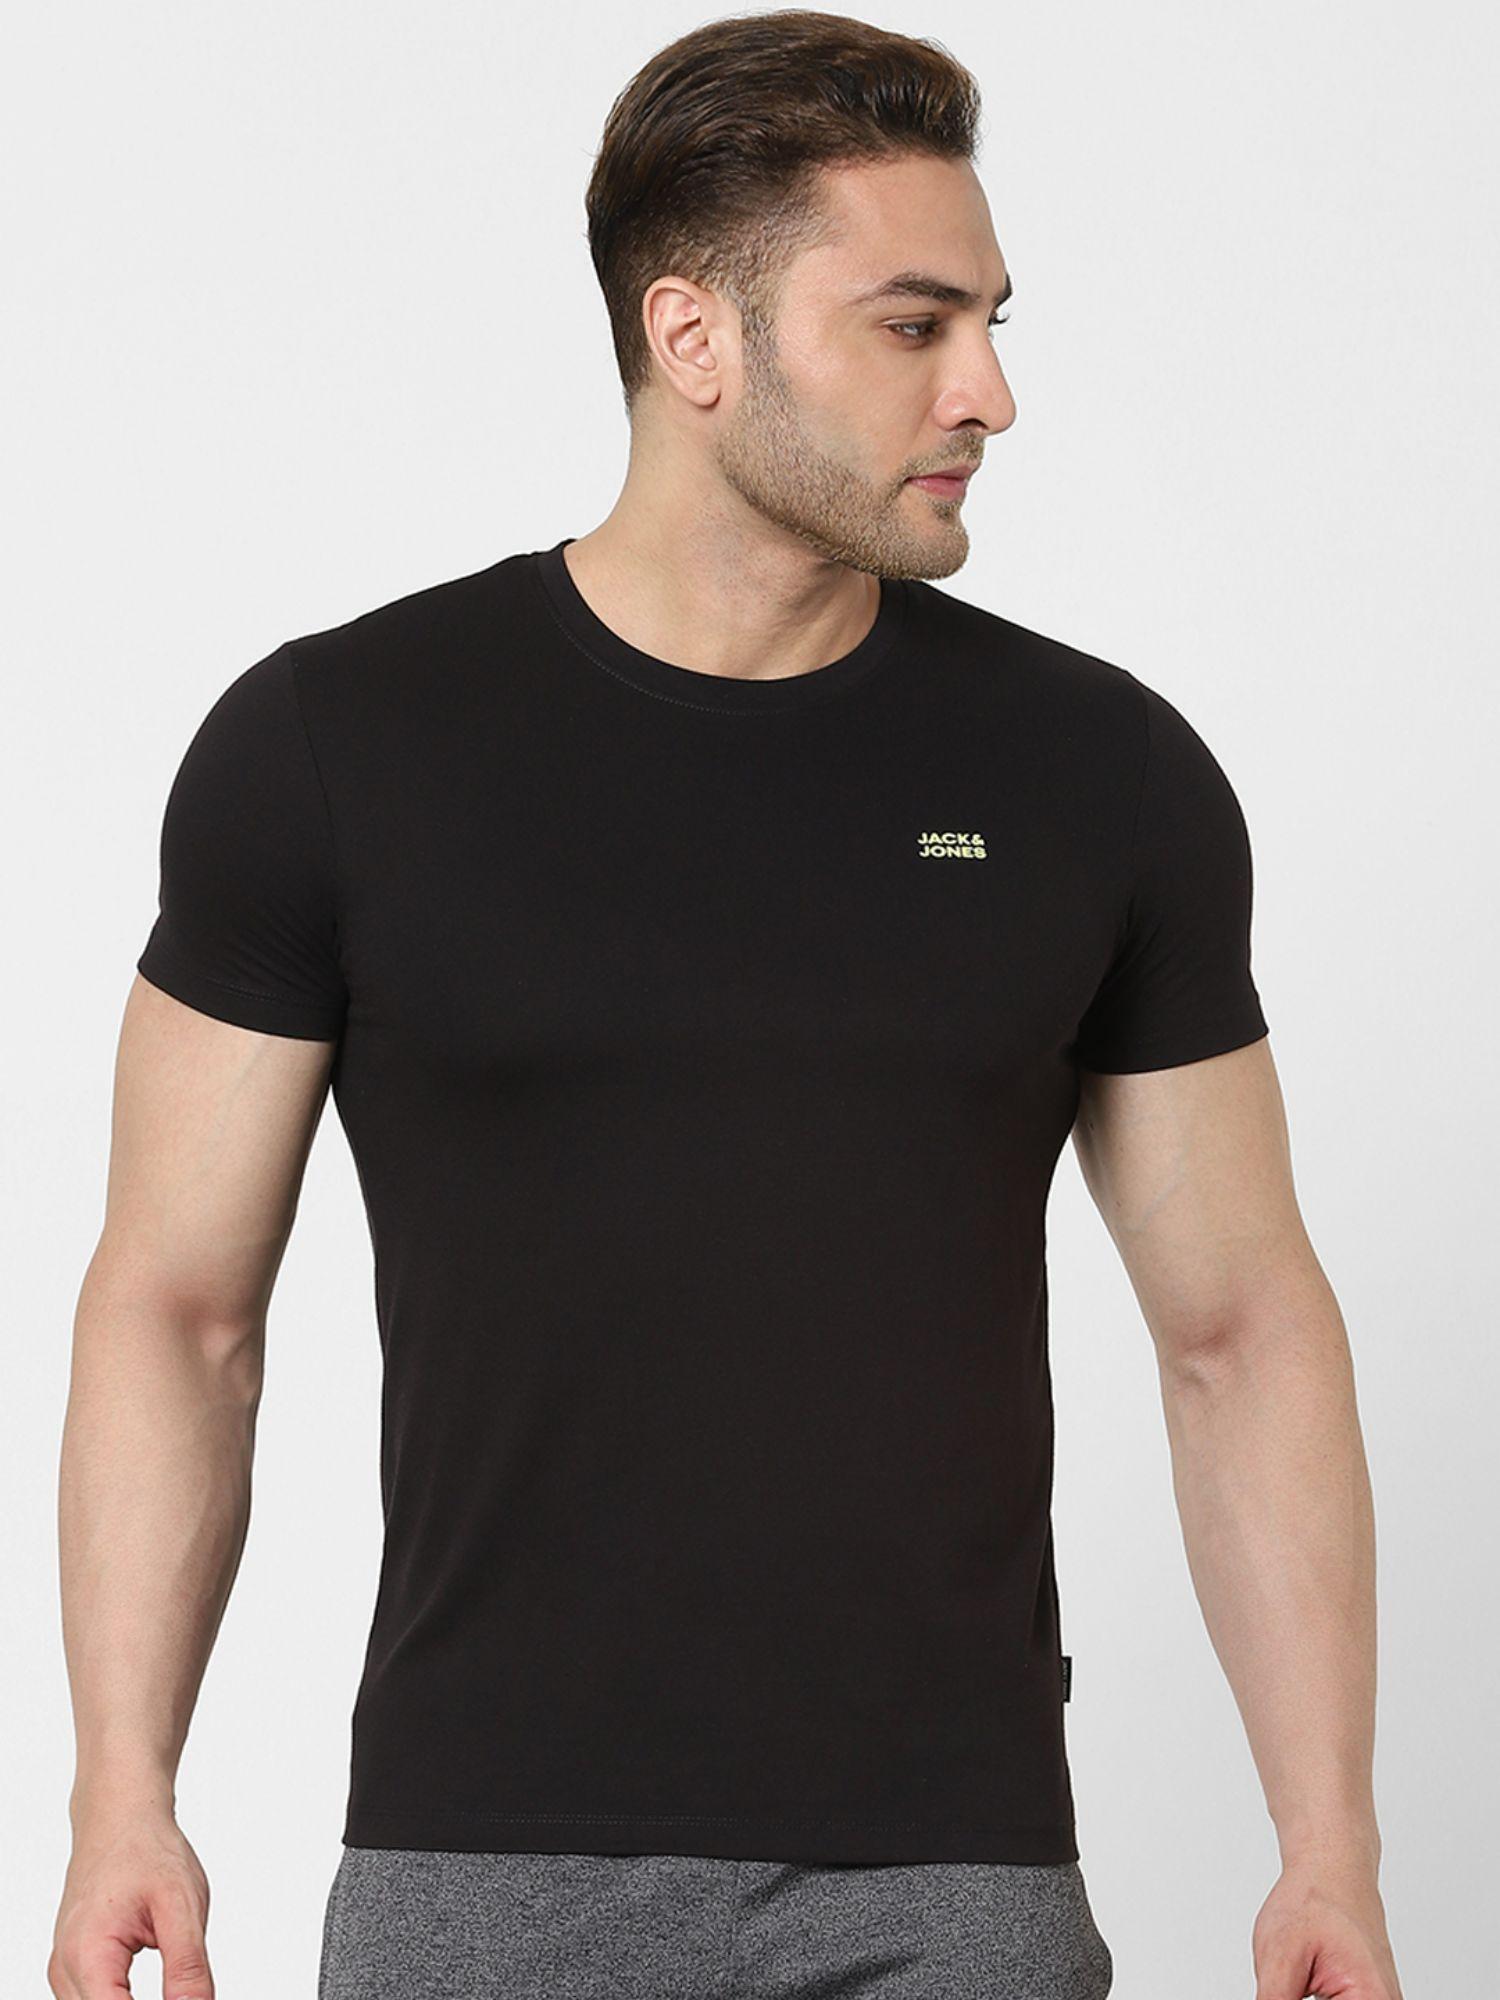 men-solid-black-t-shirt